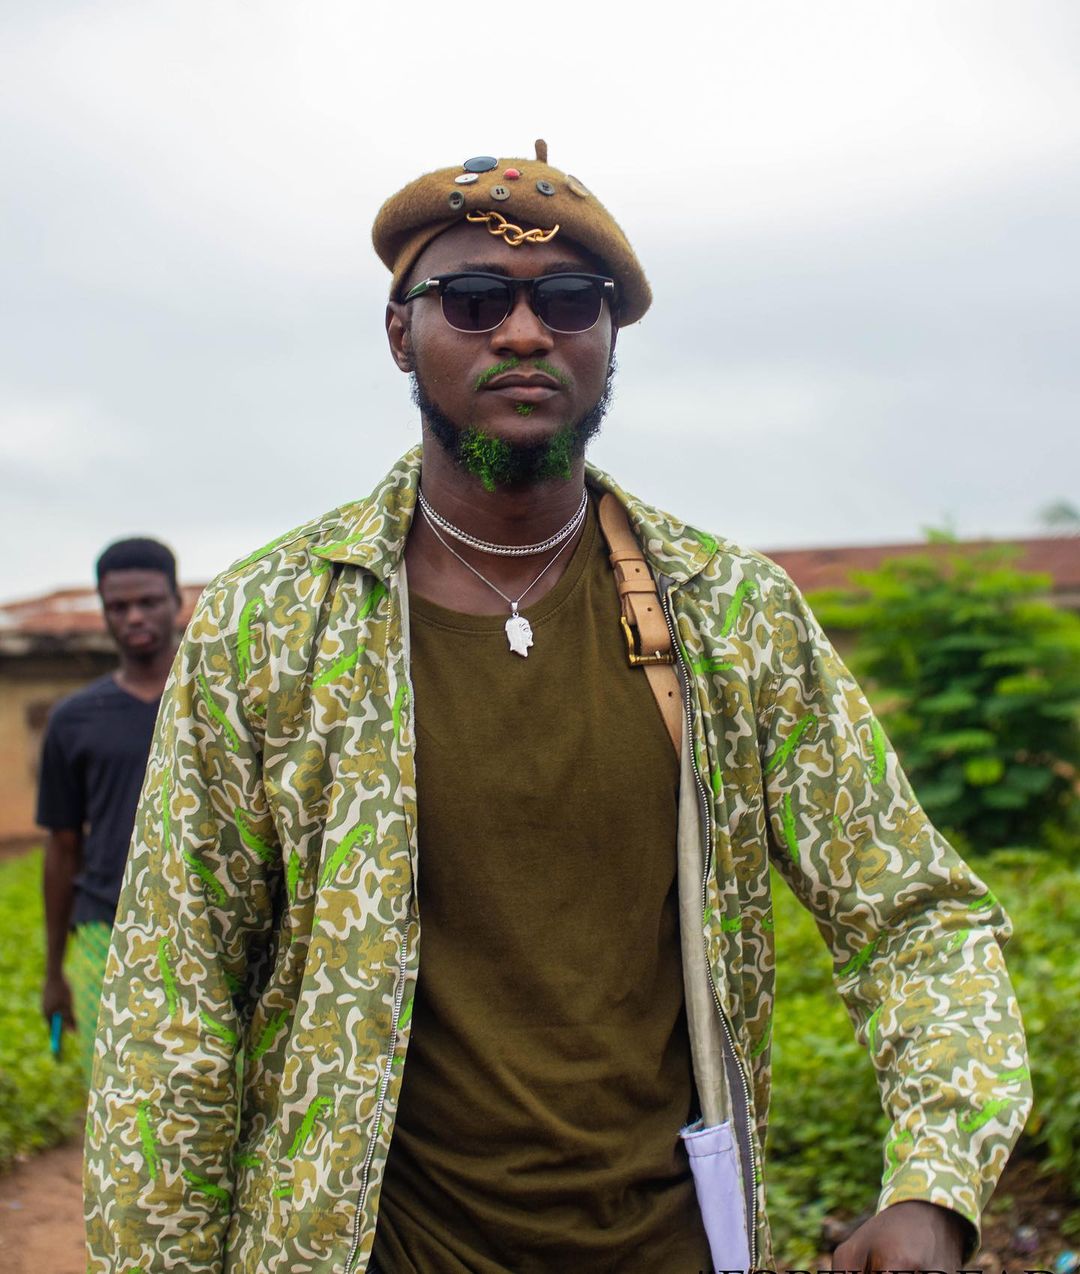 ARINFESESI: Shot in Ibadan, Oyo state, Mr Tunez Filmmaker throws light on horrors plaguing Nigeria